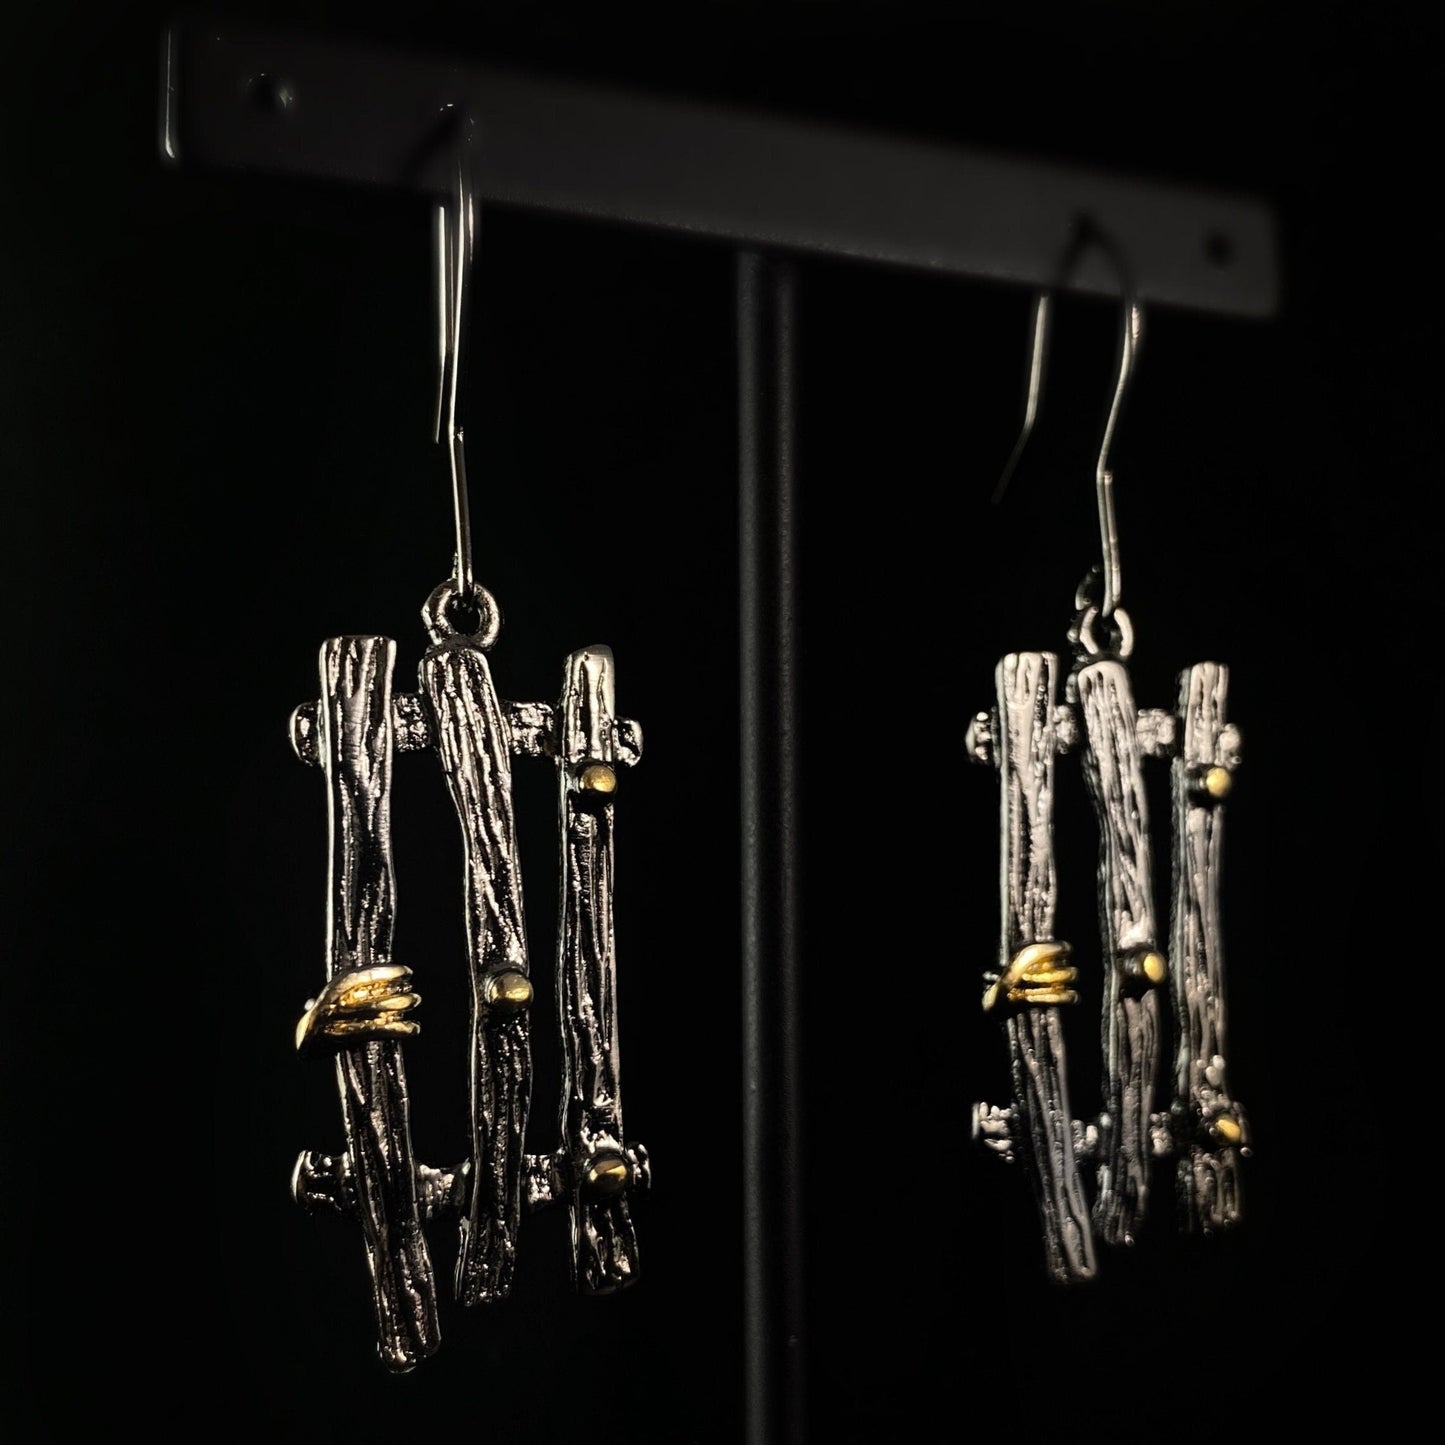 Dark Gunmetal Criss Cross Drop Earrings with Gold Accent, Handmade, Nickel Free - Elegant Minimalist Jewelry for Women